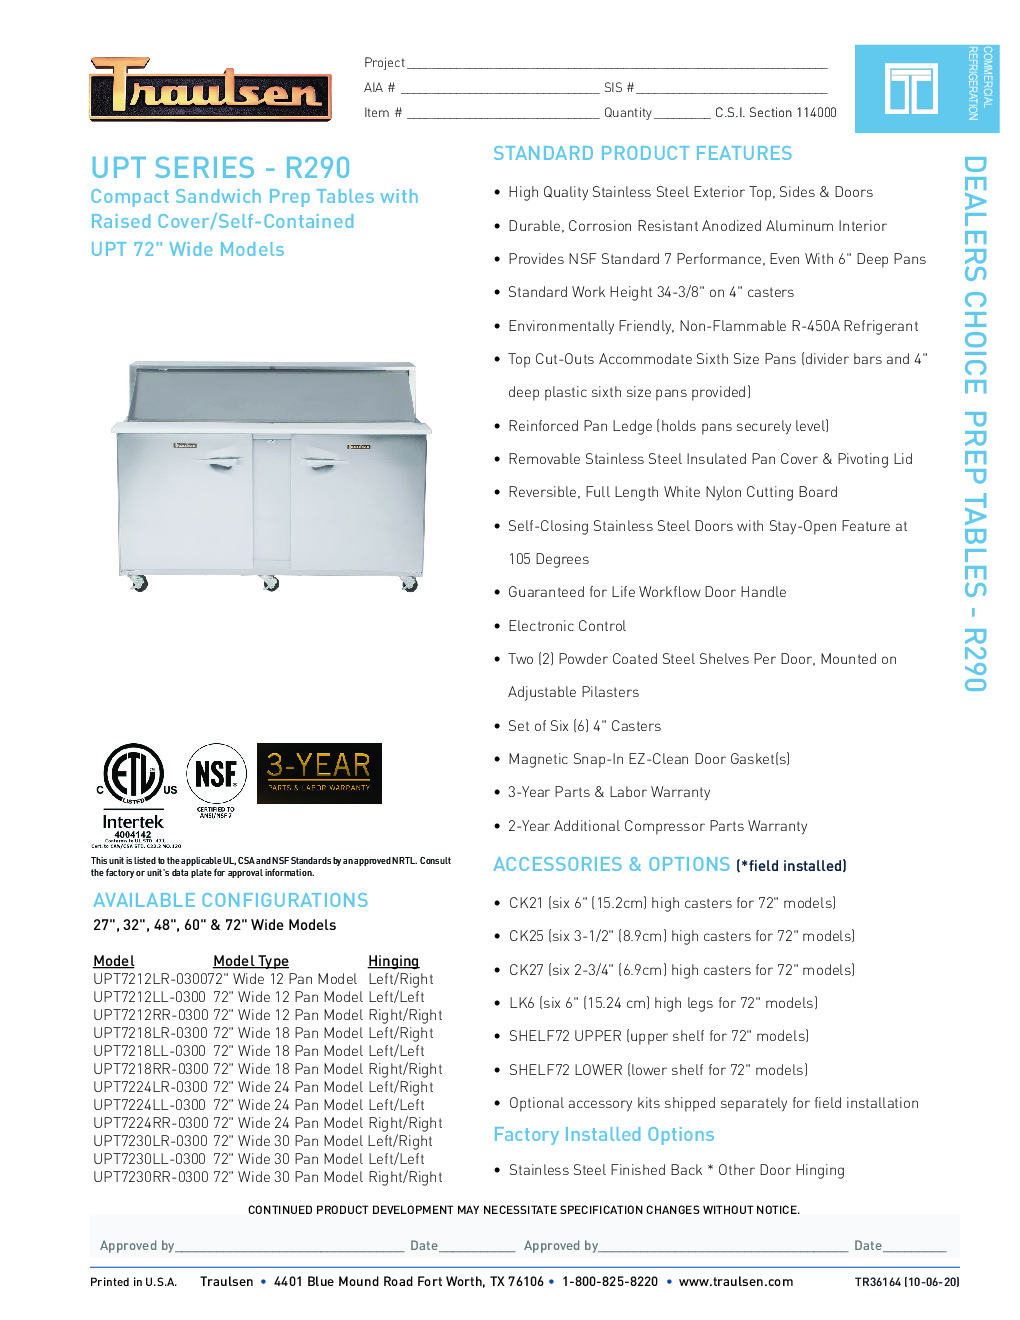 Traulsen UPT7224LR-0300 Sandwich / Salad Unit Refrigerated Counter